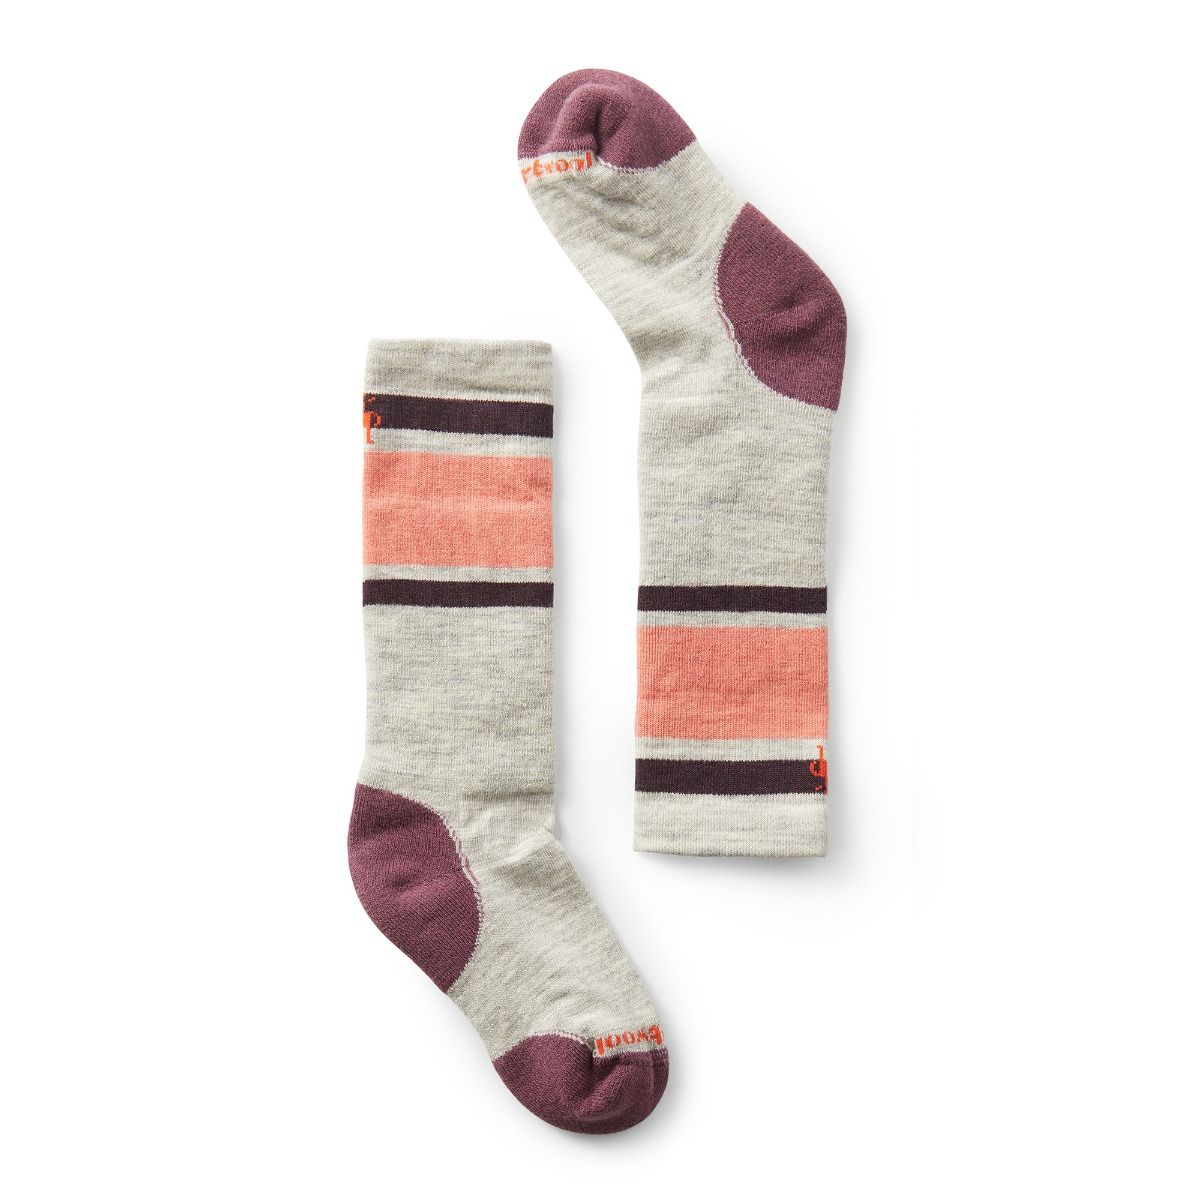 6 Pairs Assorted Stripes Winter Soft Warm Toe Socks Size 9-11 Cozy